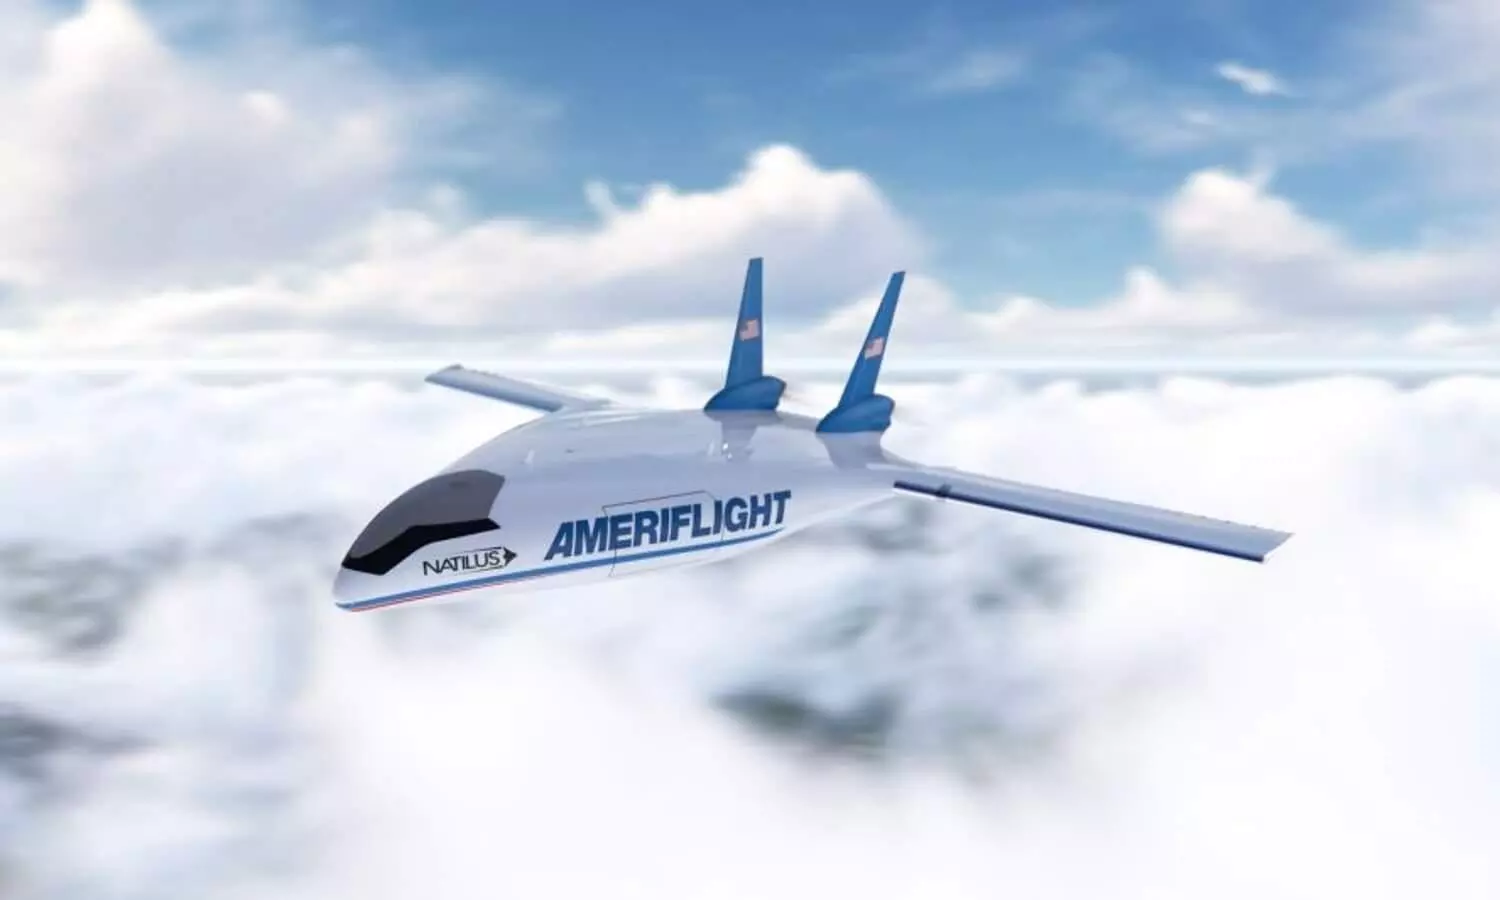 Natilus, Ameriflight sign deal for 20 cargo aircraft